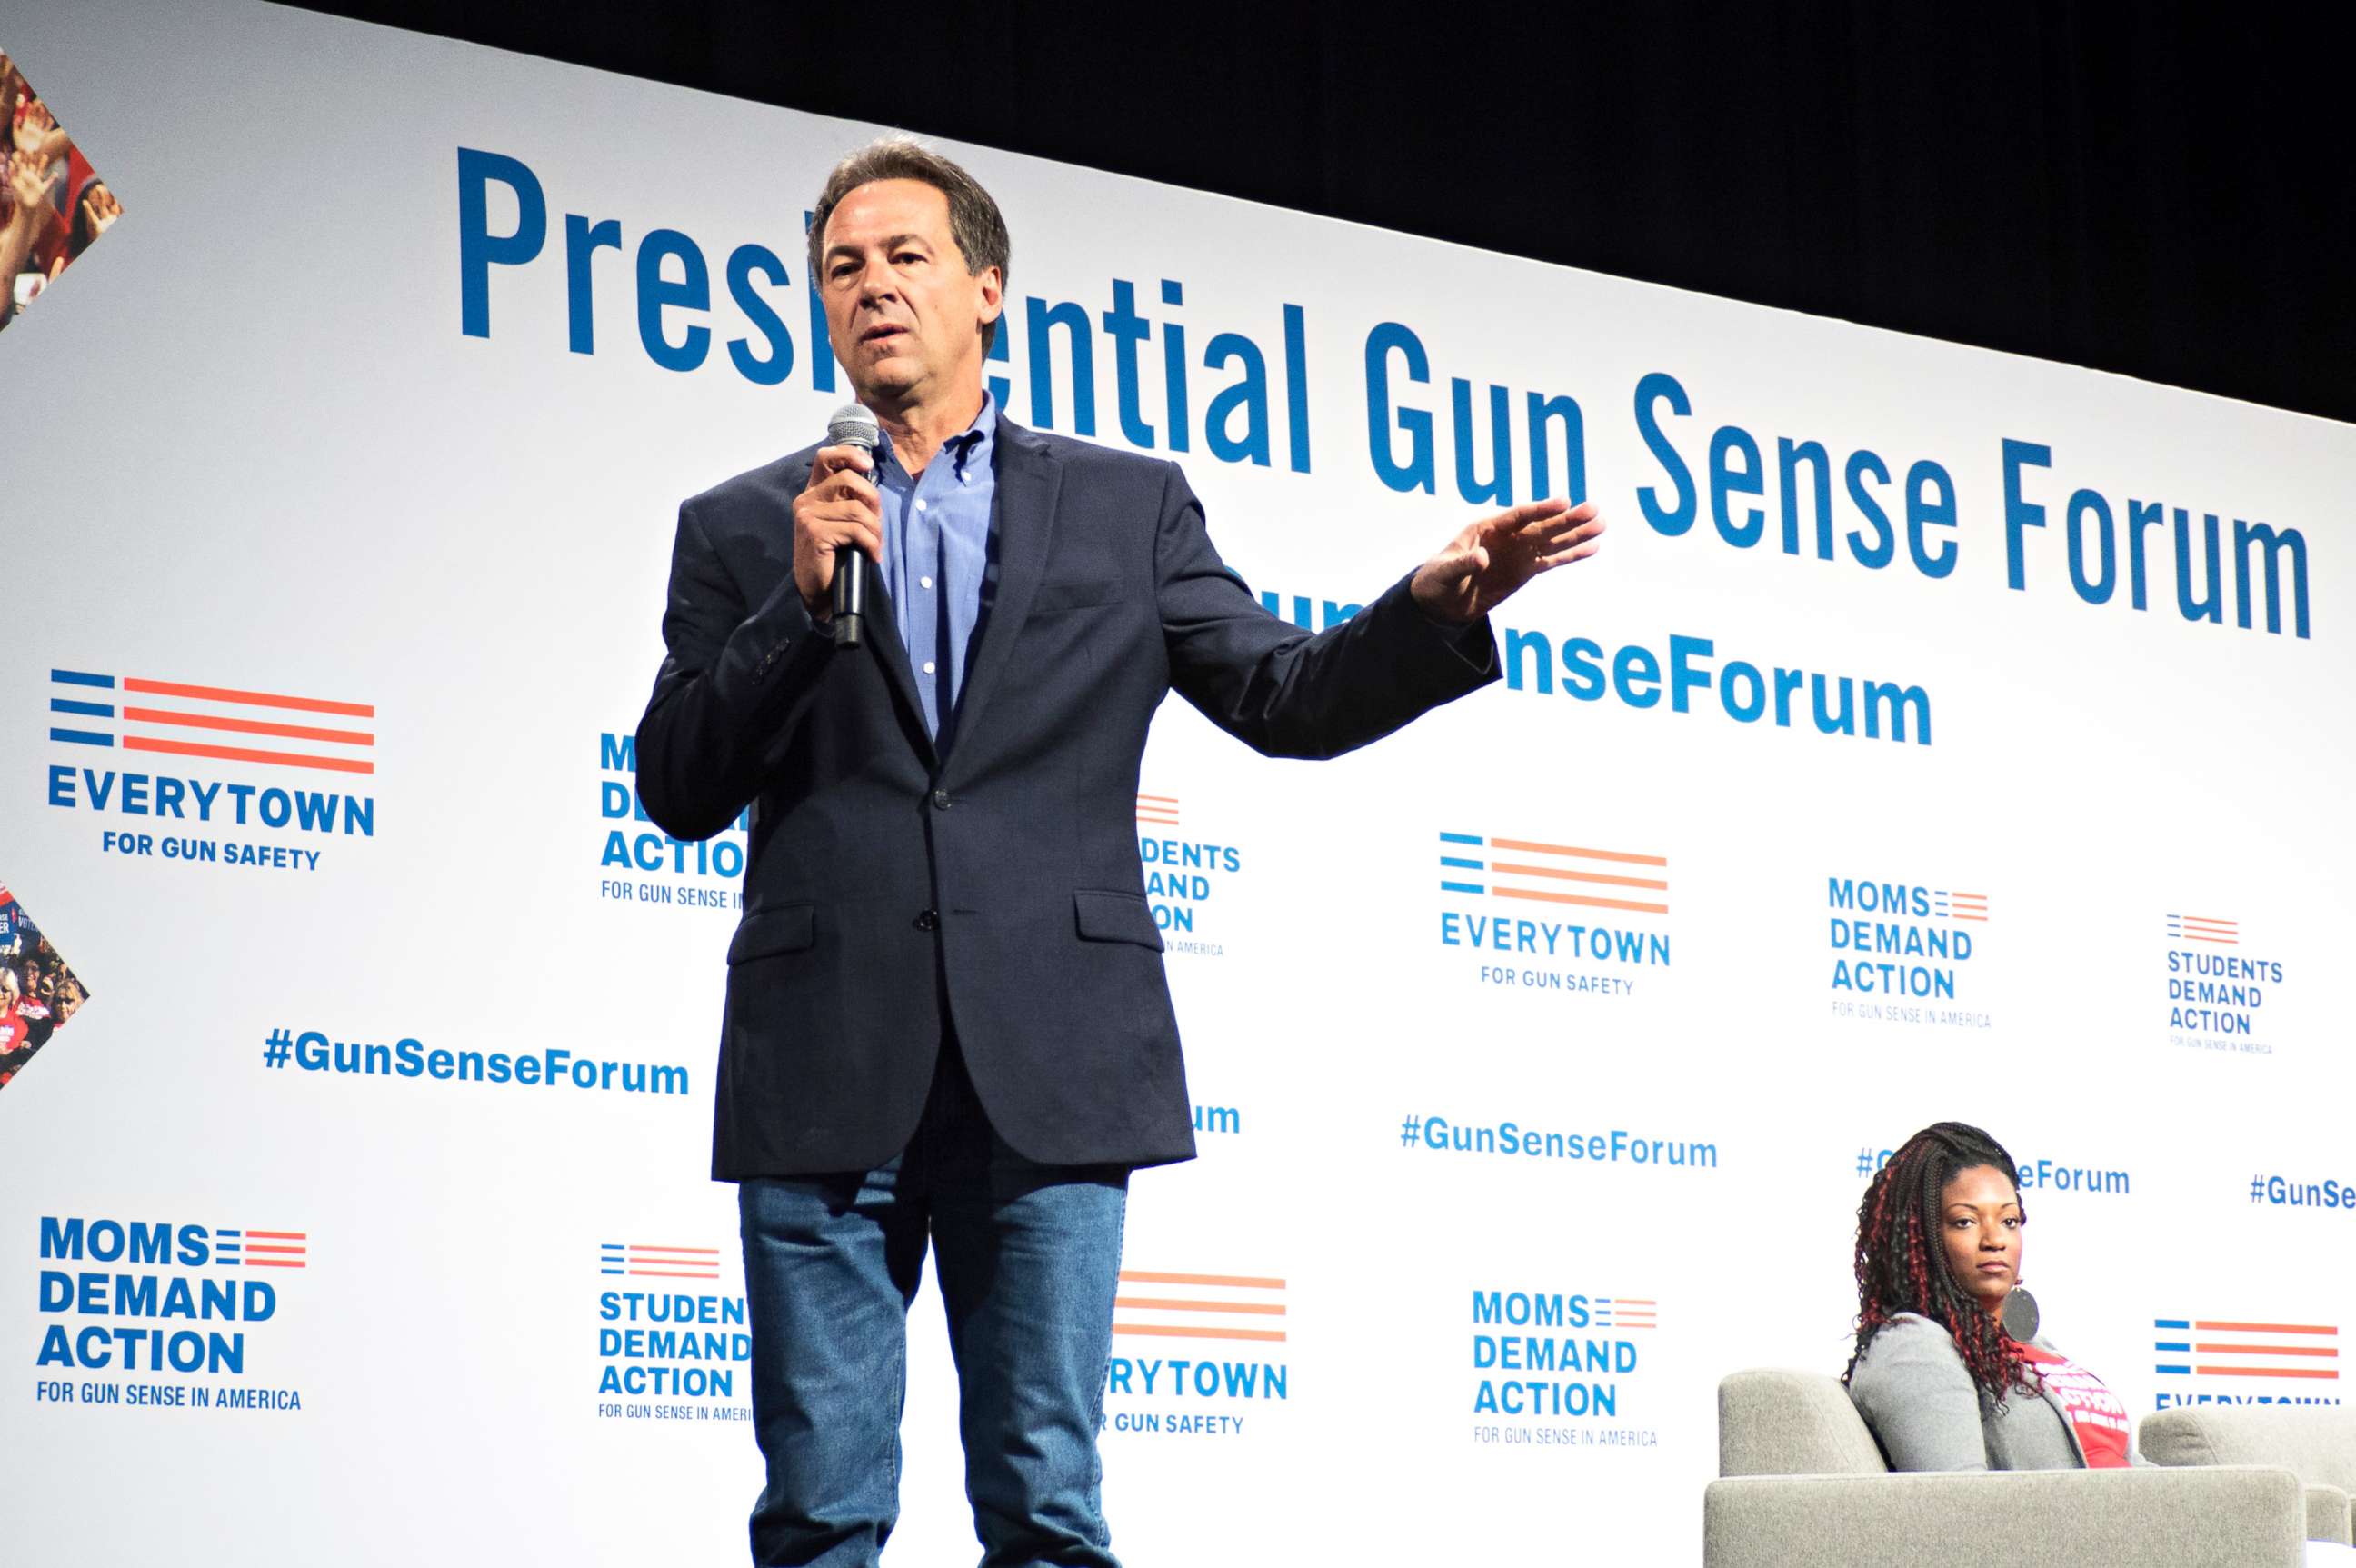 PHOTO: Montana governor Steve Bullock speaks at the Presidential Gun Sense Forum in the Iowa Events Center in Des Moines.